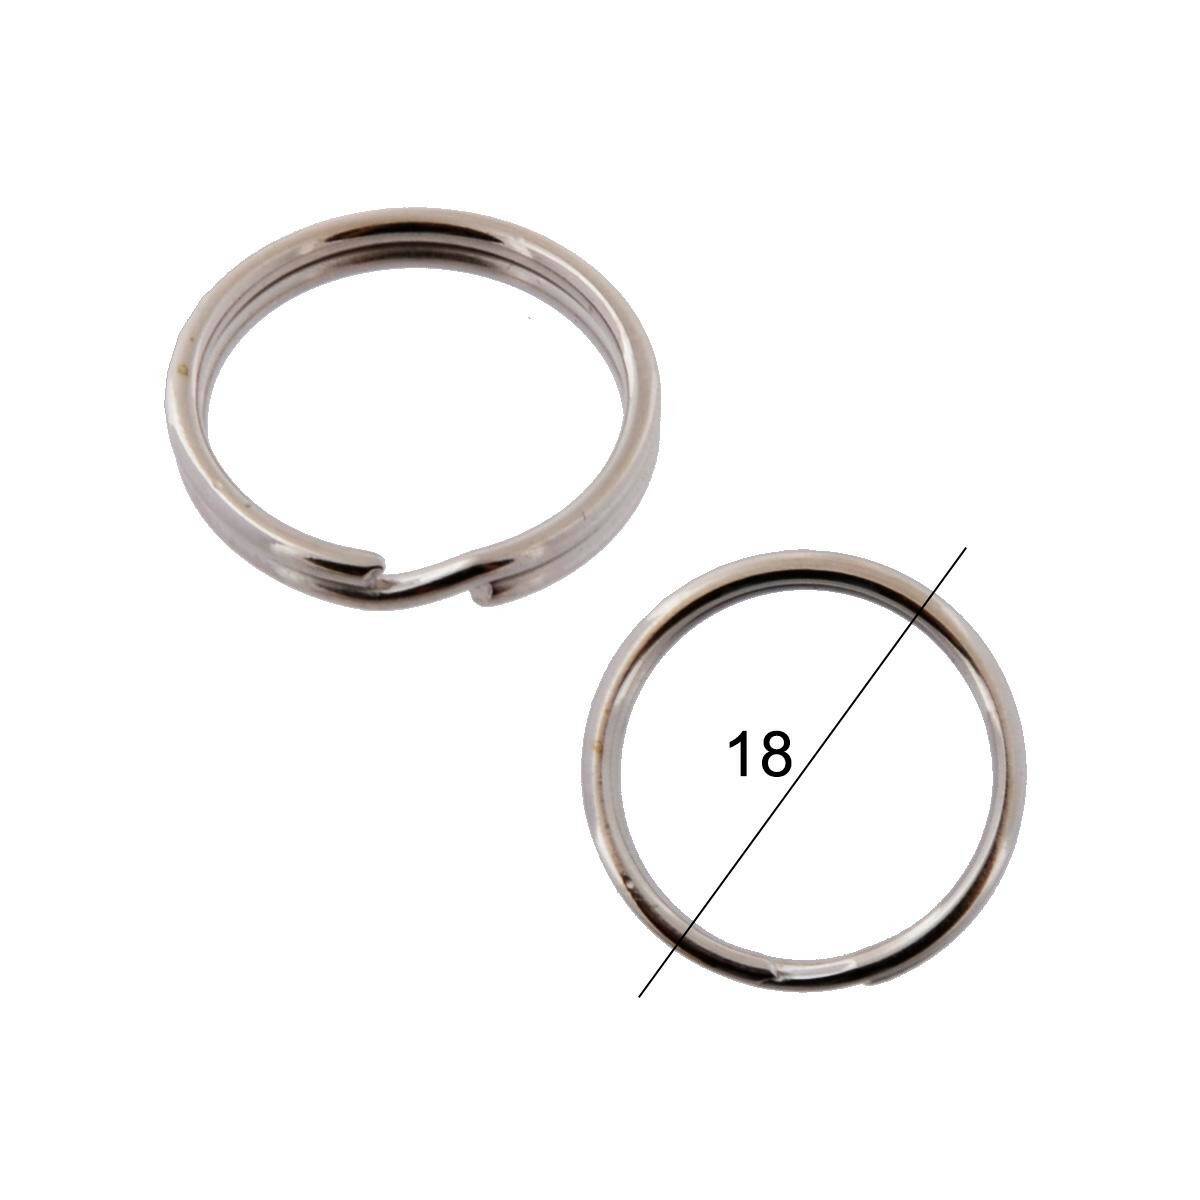 Key rings standard - diameter 18mm